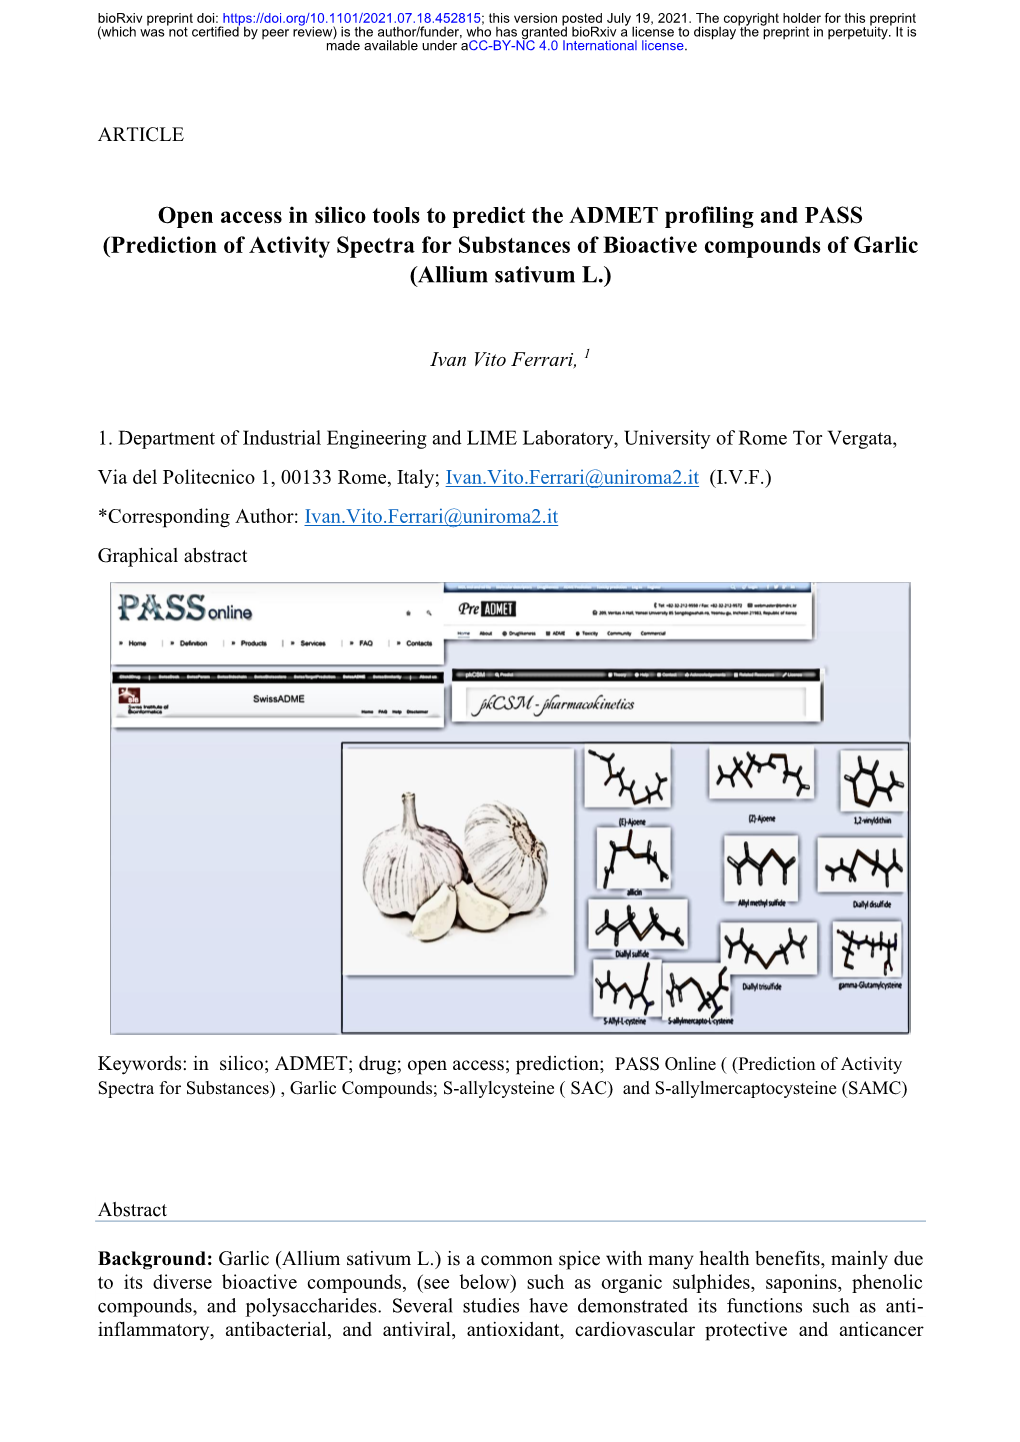 Prediction of Activity Spectra for Substances of Bioactive Compounds of Garlic (Allium Sativum L.)